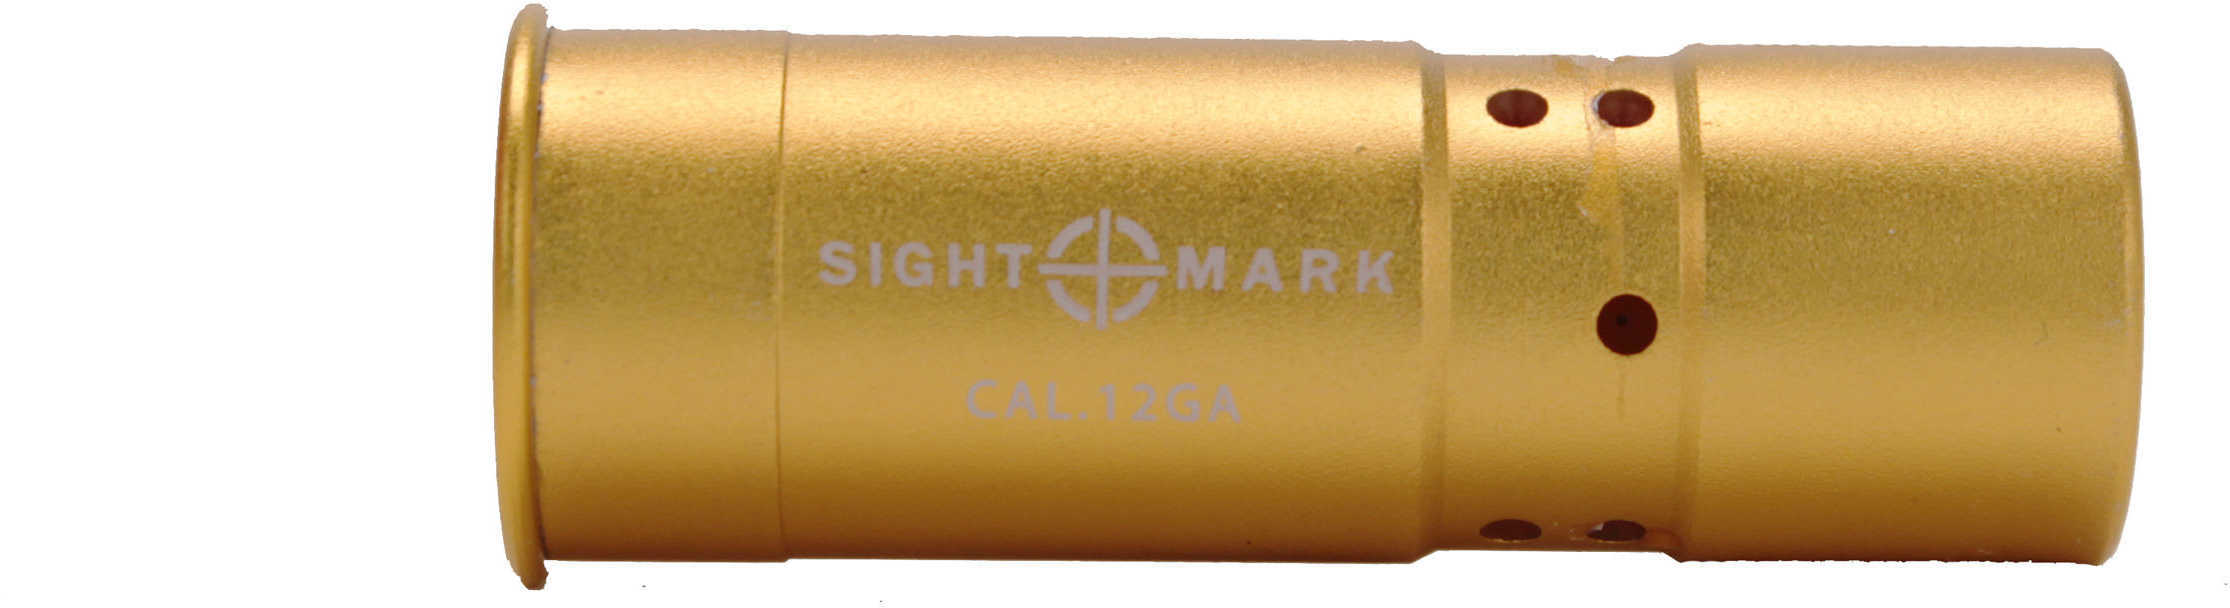 Sightmark Boresight 12 Gauge SM39007